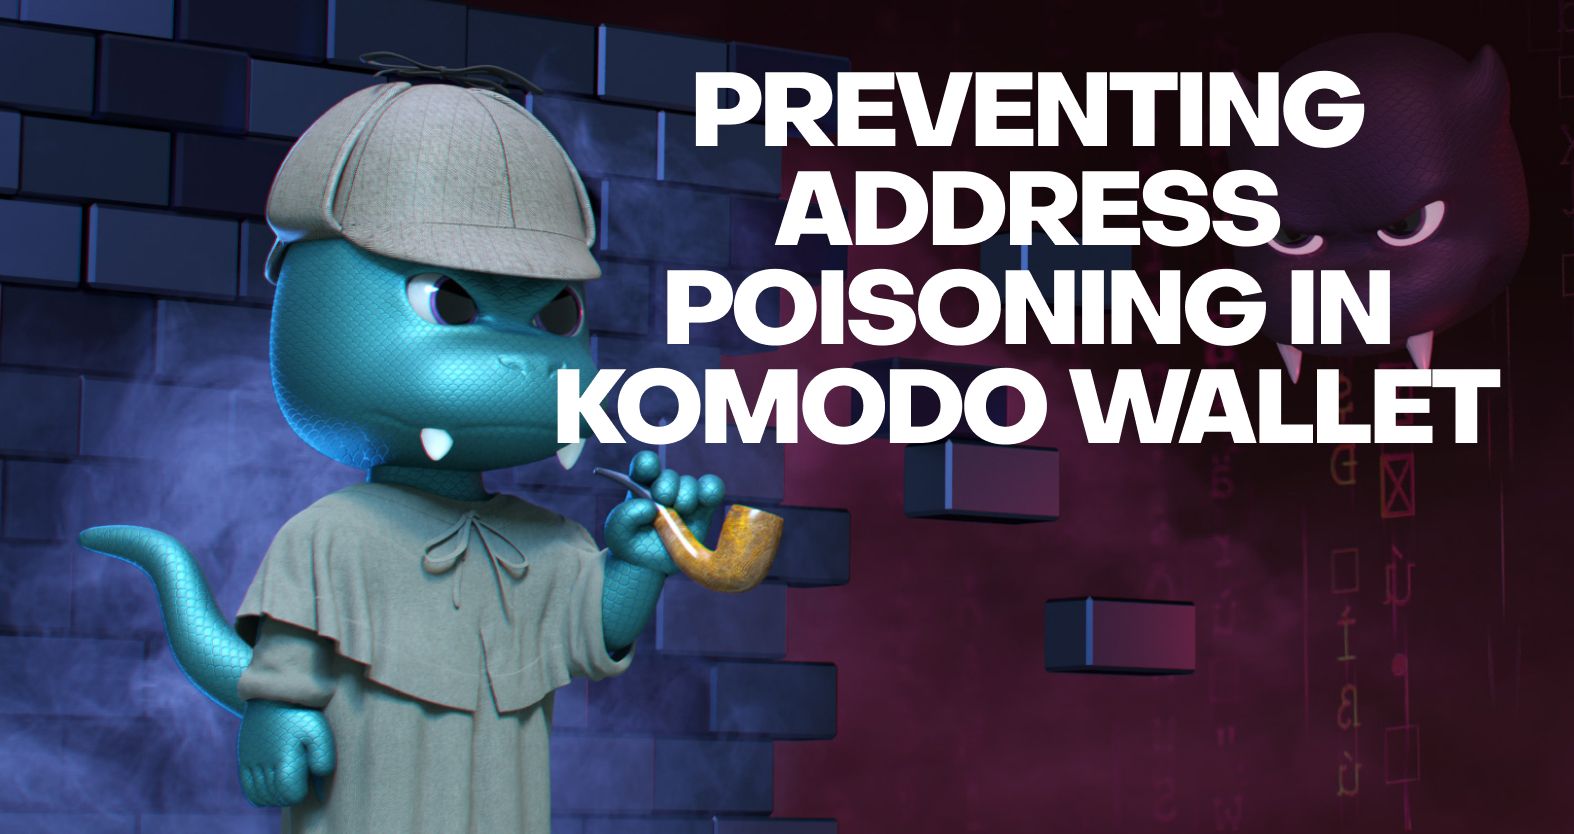 Komodo Wallet mitigates address poisoning